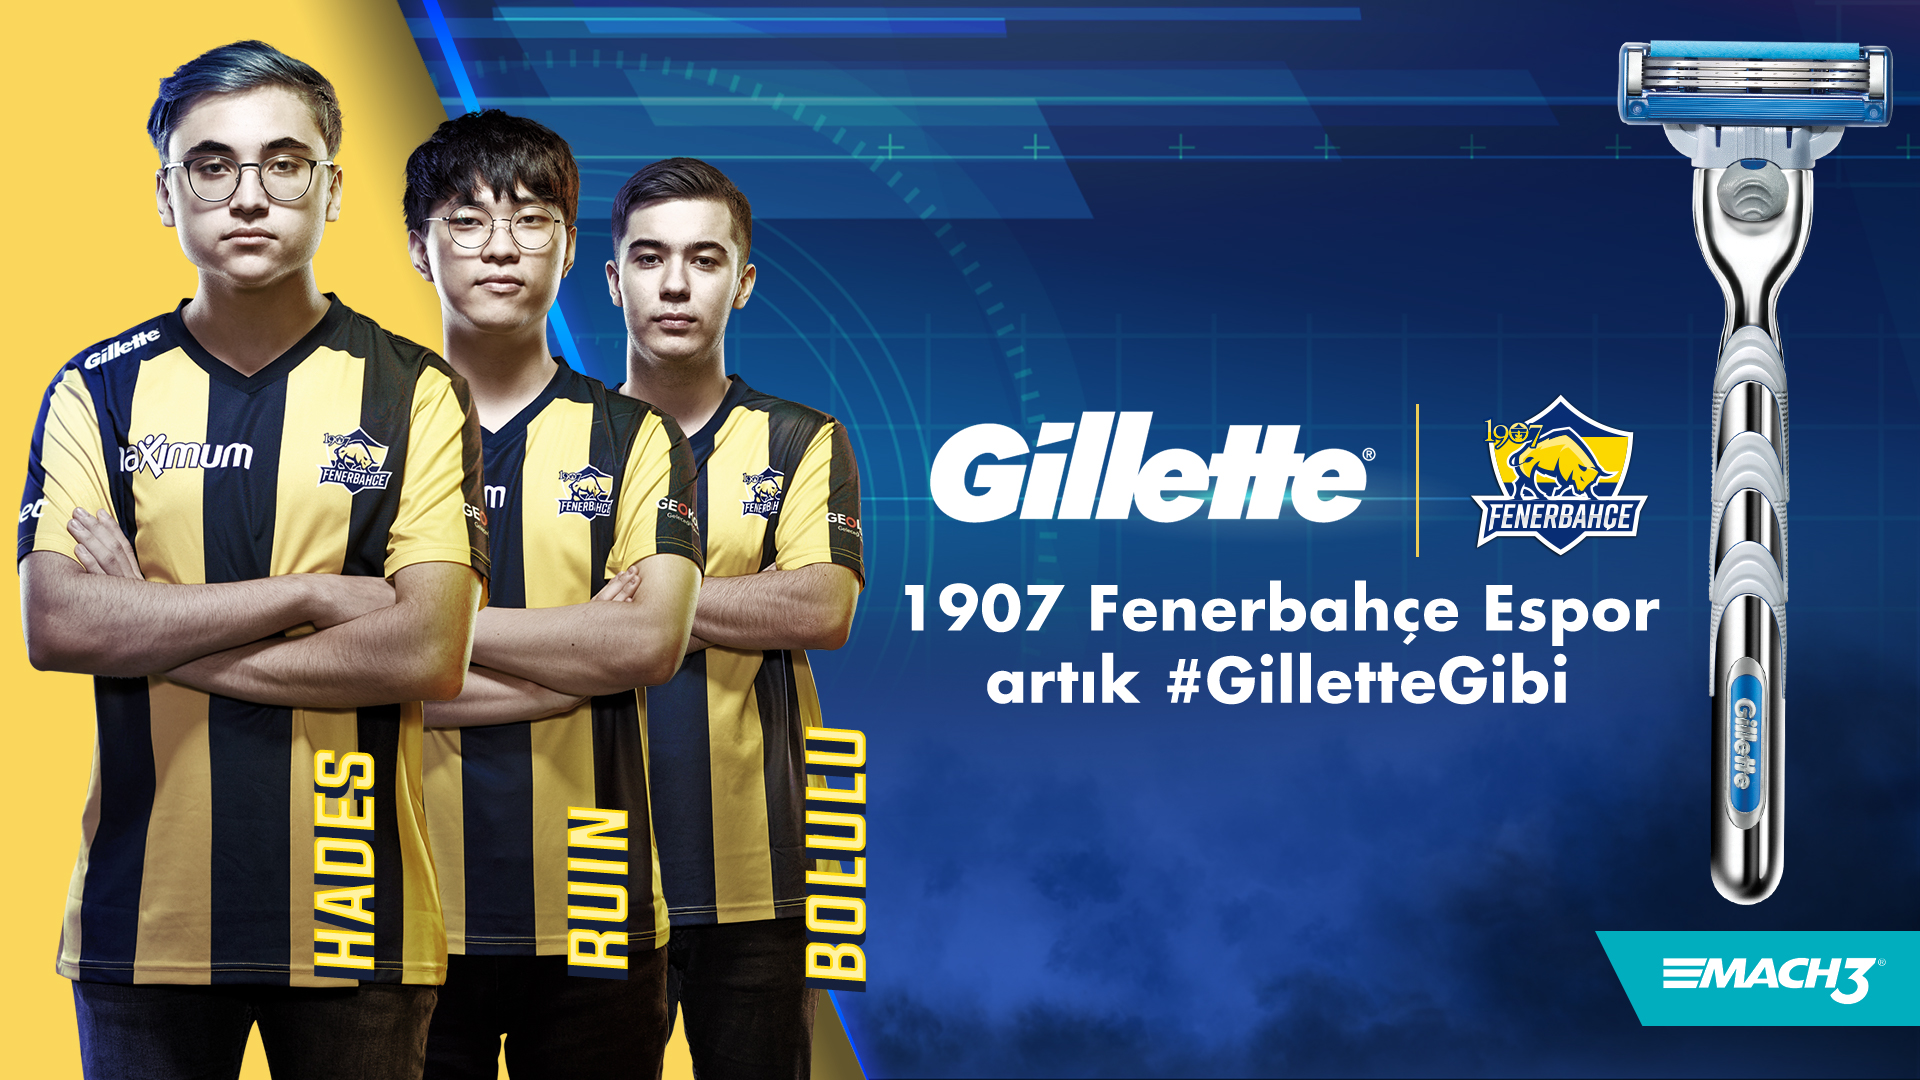 1907 Fenerbahçe Espor Şimdi #GilletteGibi! 